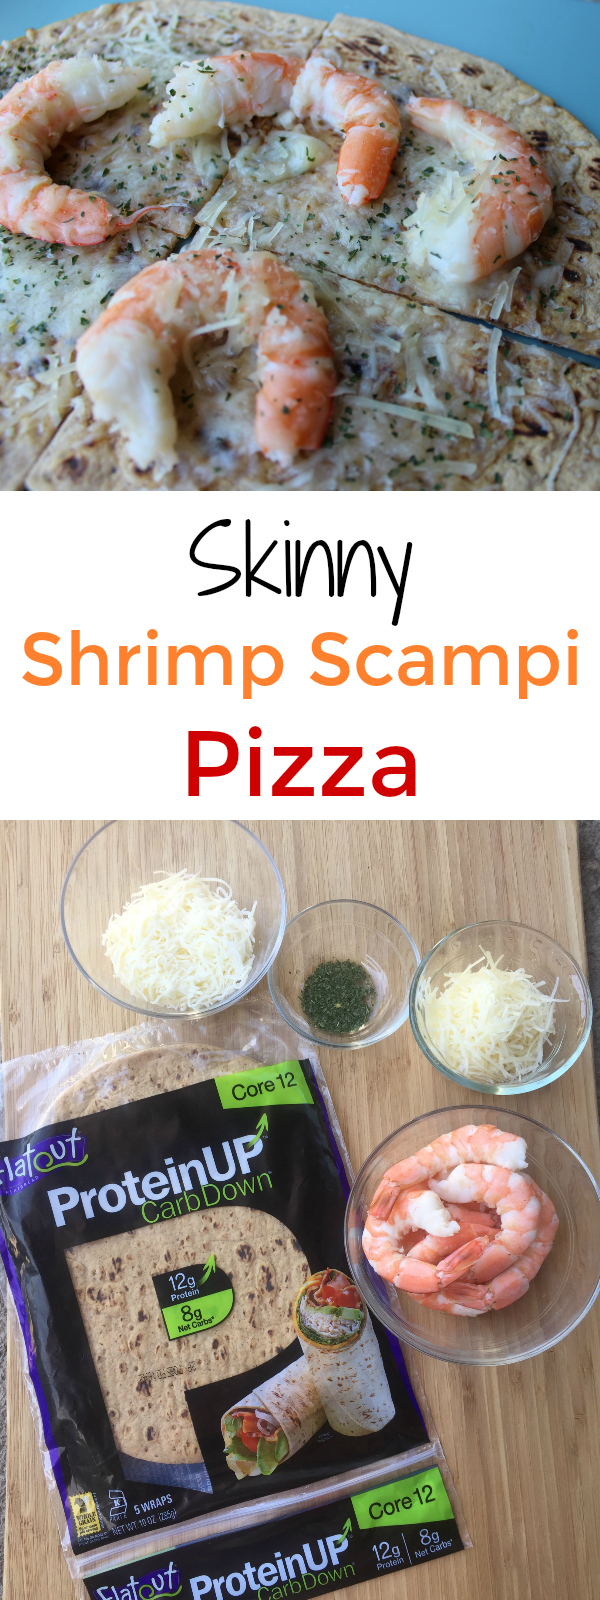 Skinny Shrimp Scampi